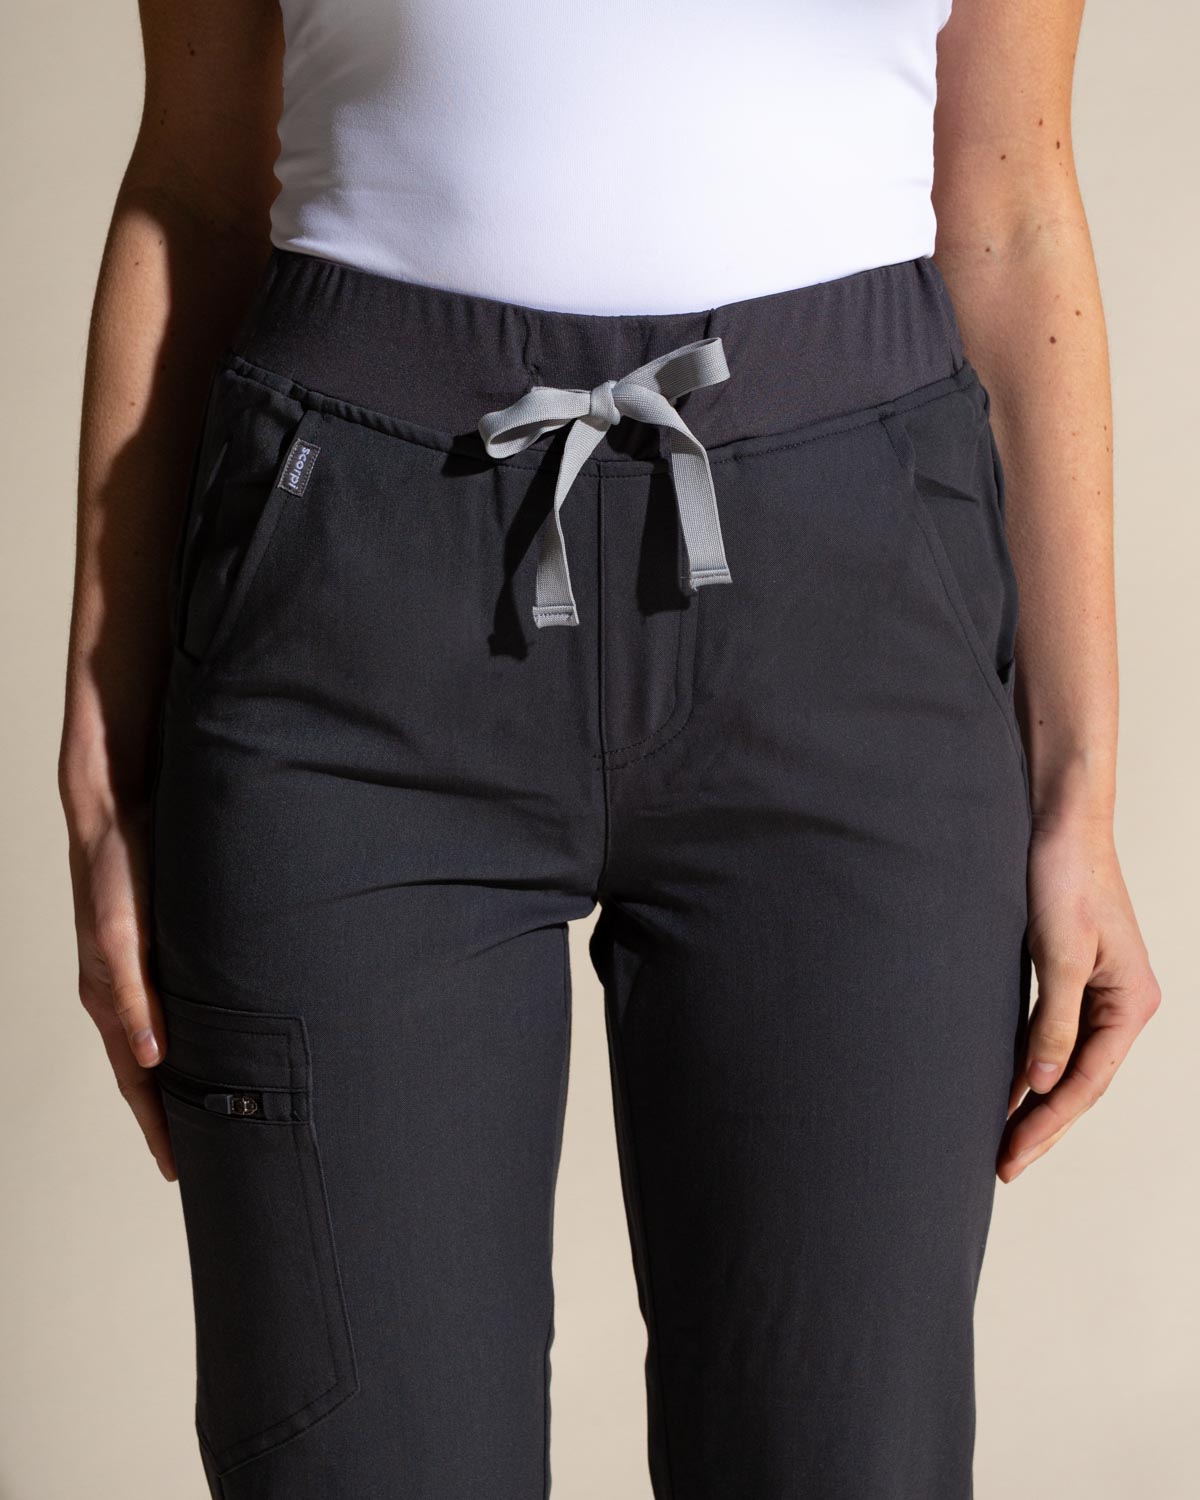 Pantalón Mujer - Uniformes Clínicos - Scorpi Jogger